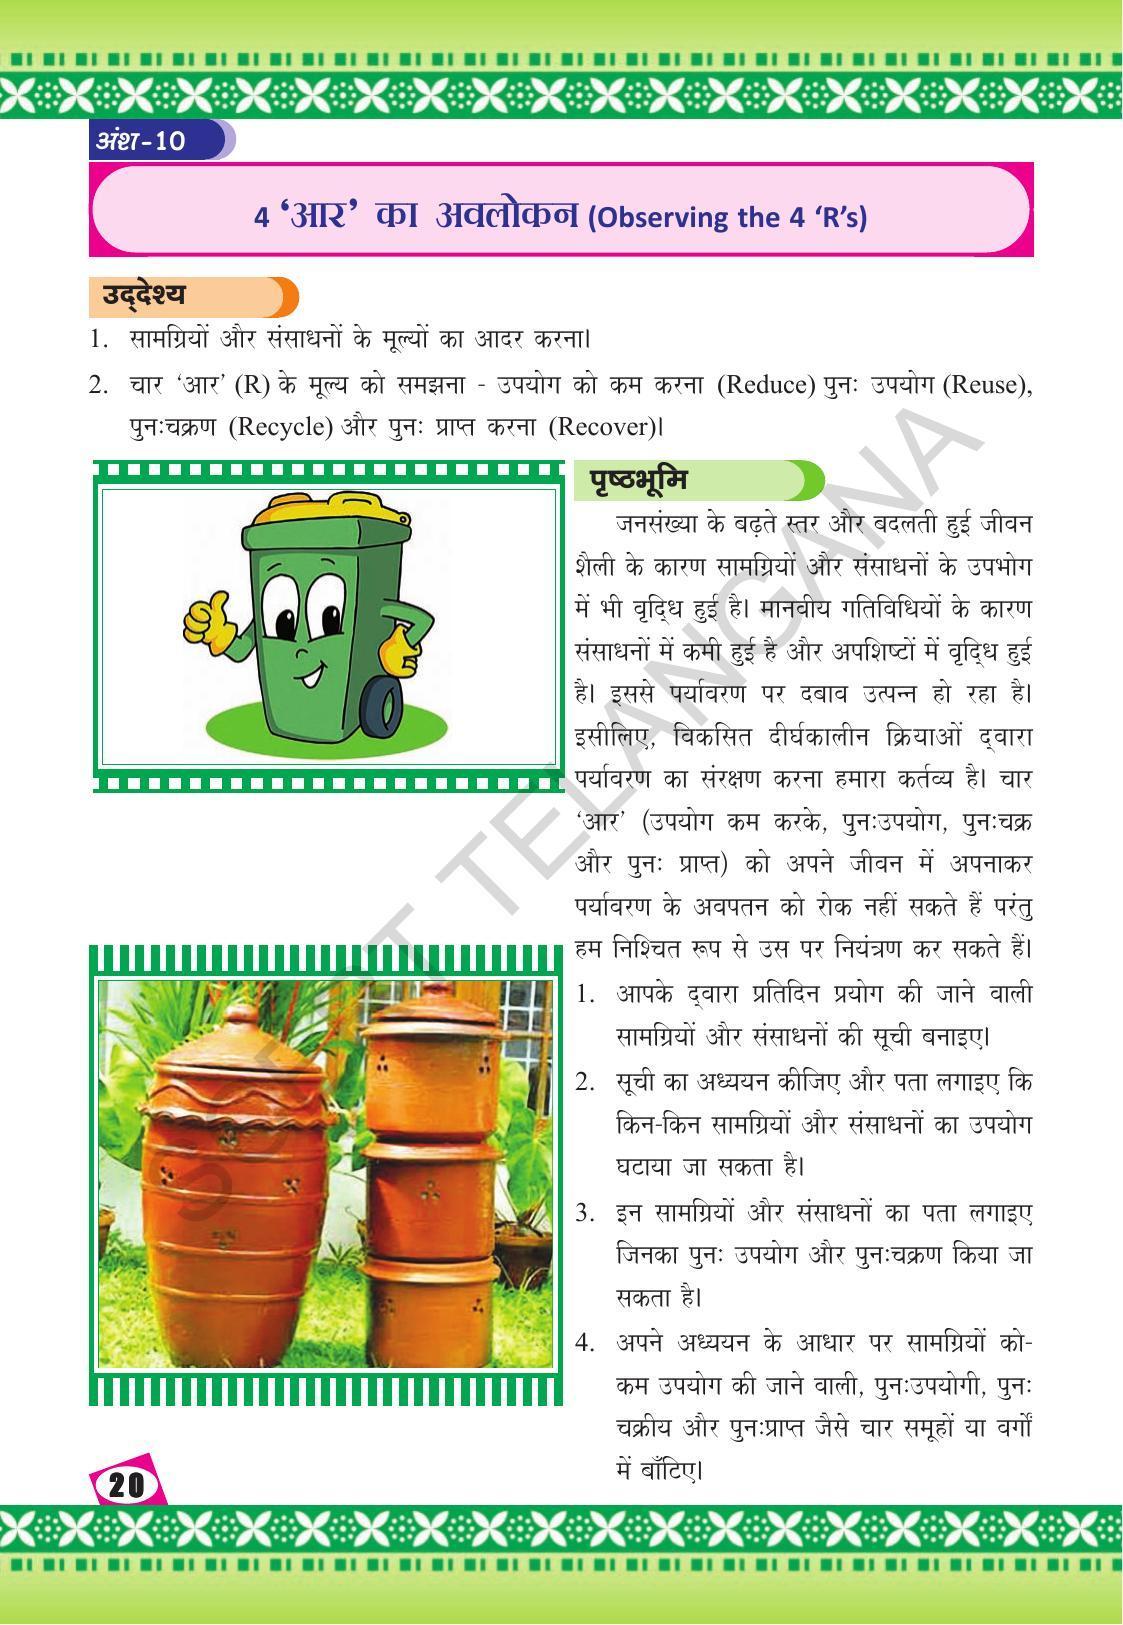 TS SCERT Class 10 Social Environmental Education (Hindi Medium) Text Book - Page 28